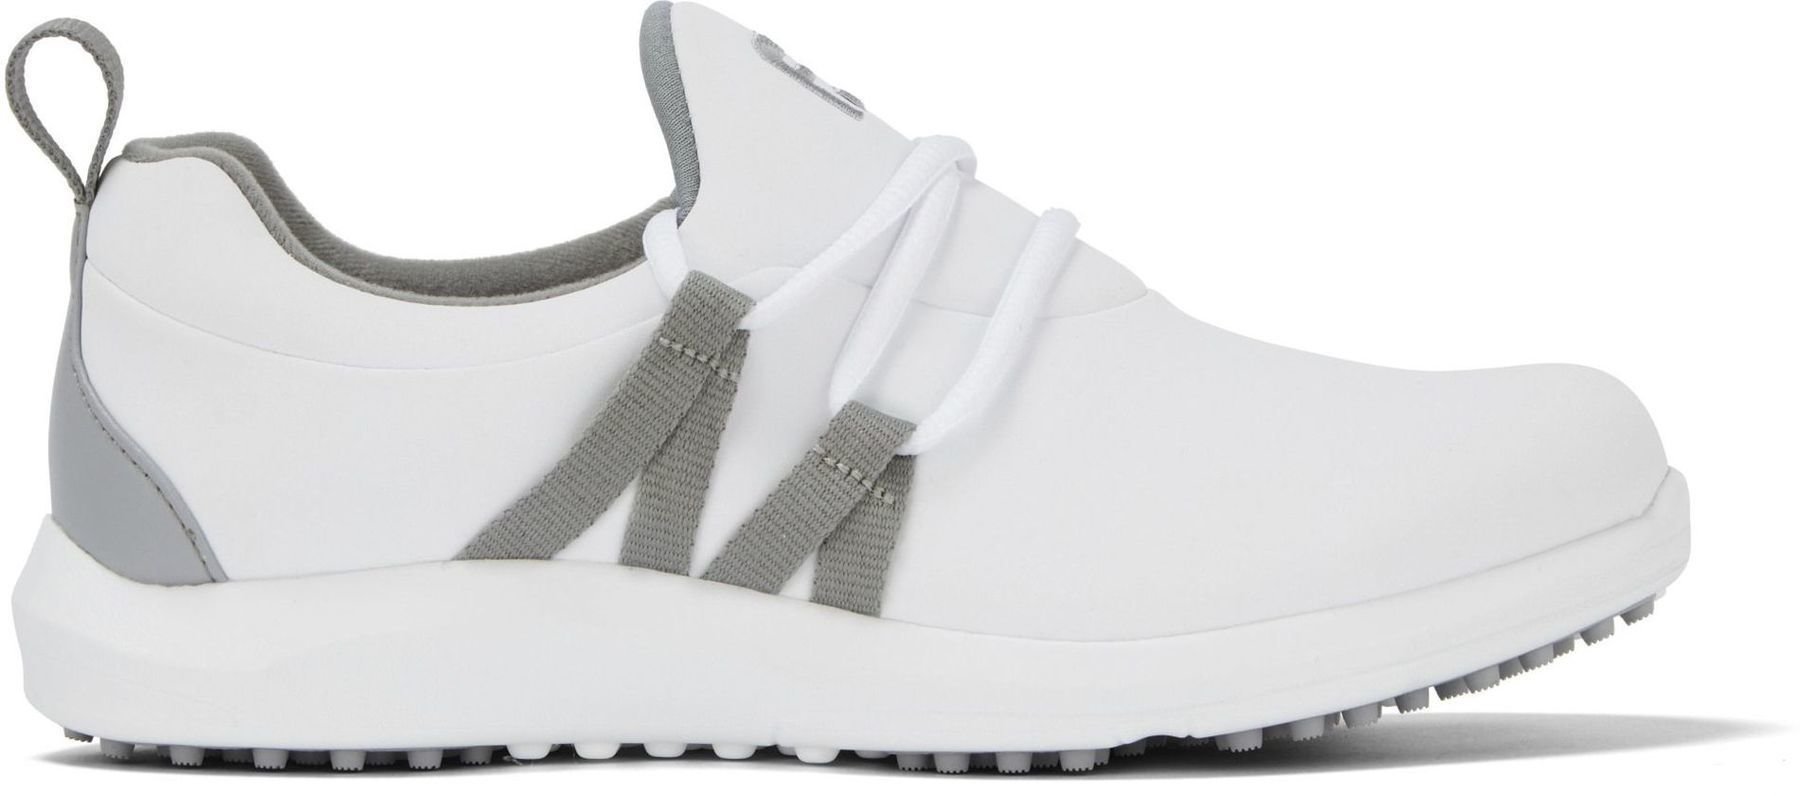 Chaussures de golf pour femmes Footjoy Leisure Slip On White/Grey 40